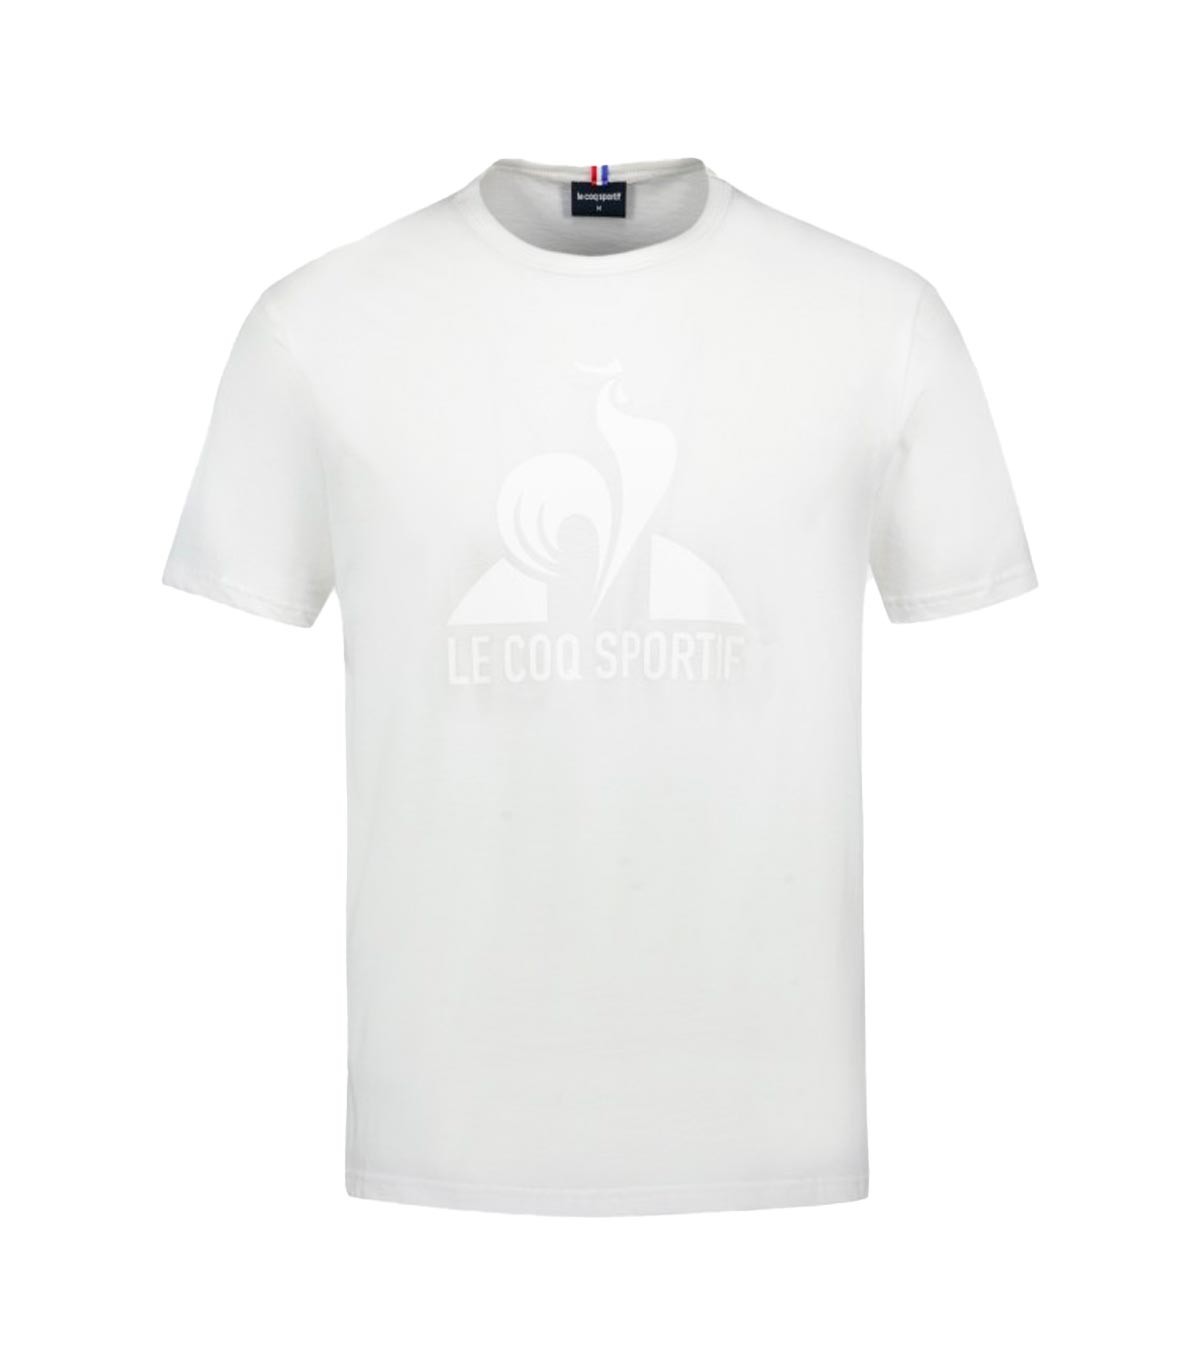 Le Coq Sportif - Camiseta Monochrome - Blanco